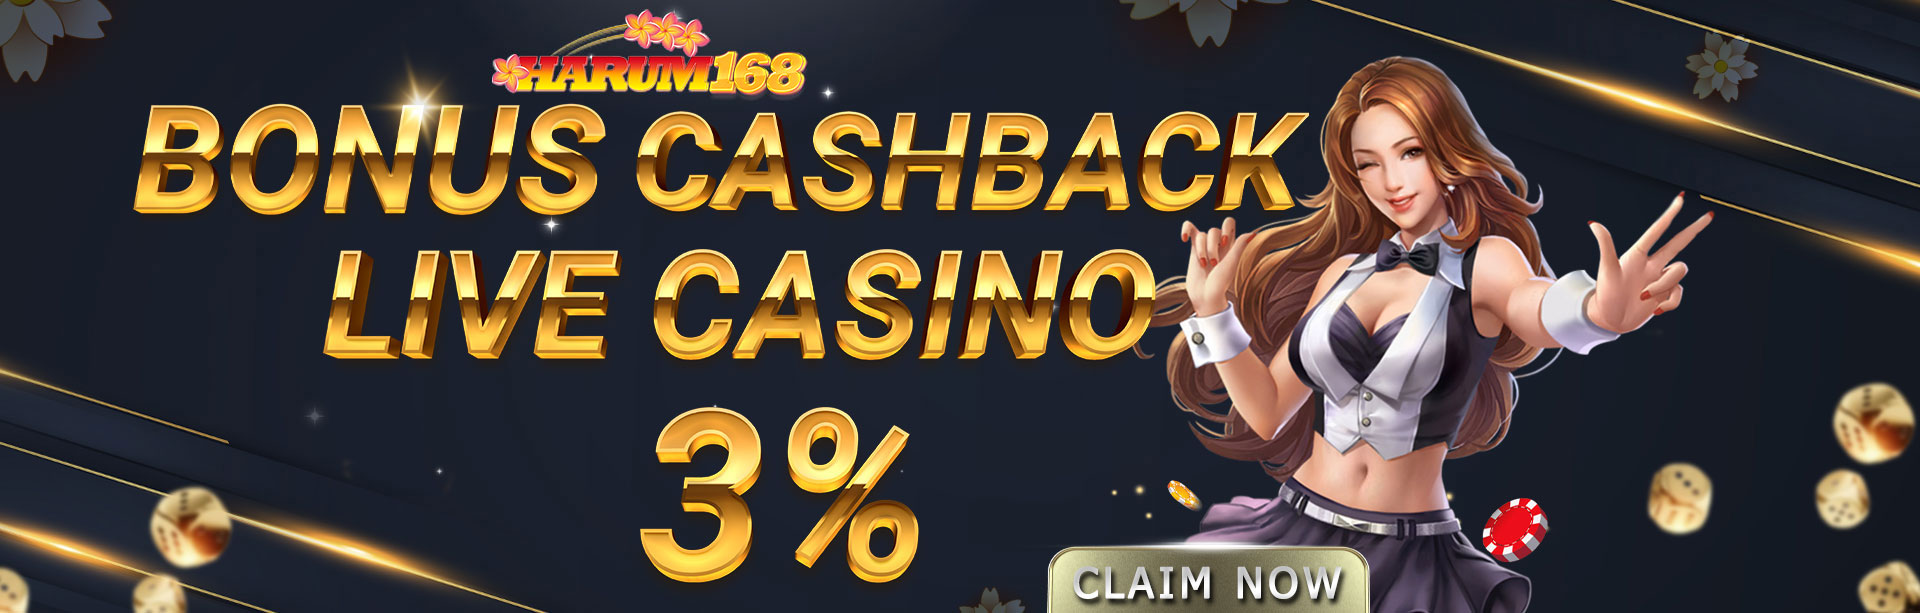 Bonus Mingguan Live Casino 3%